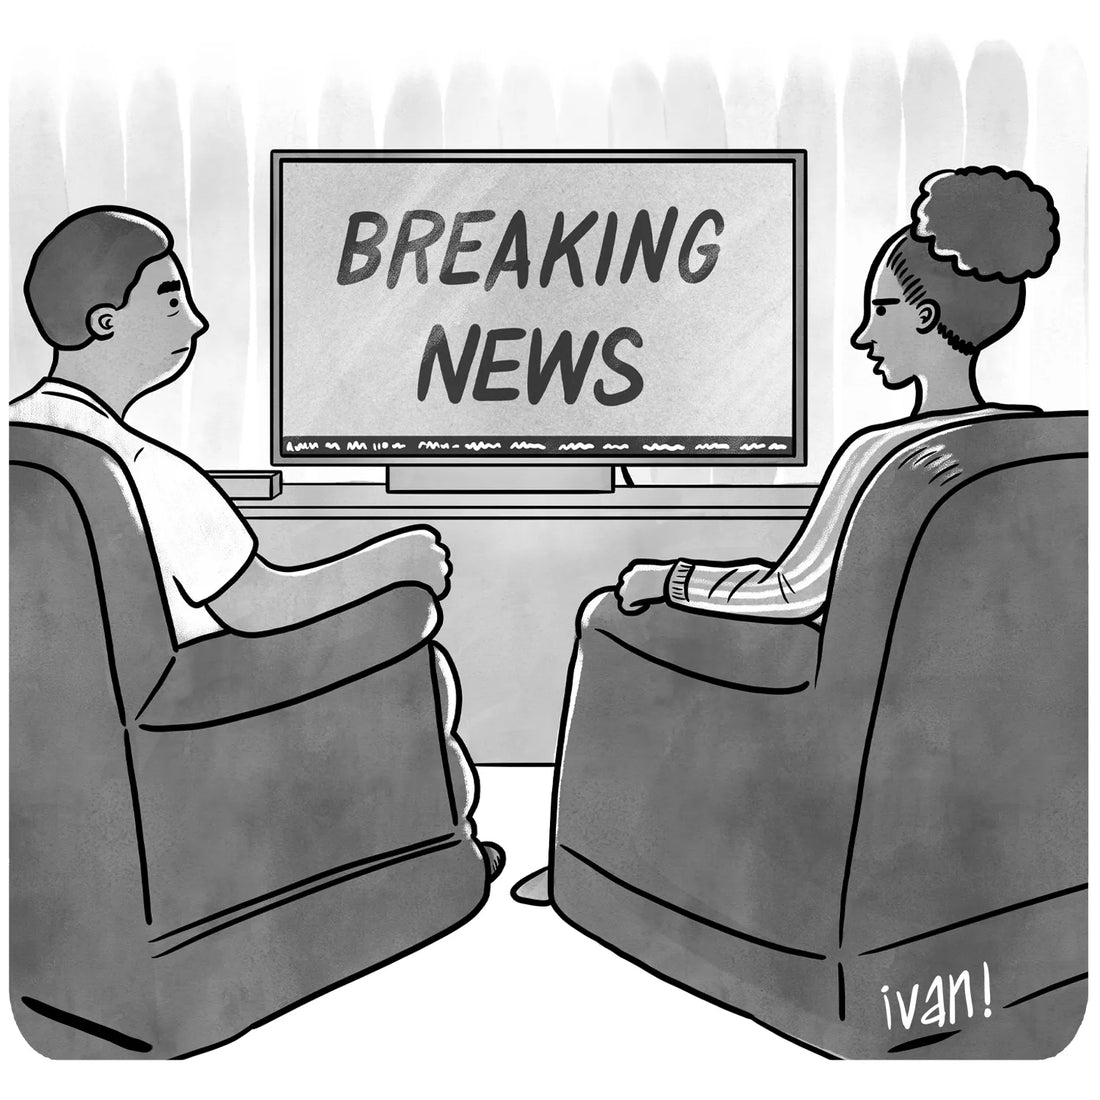 Breaking News on TV Cartoon - Source:  The New Yorker